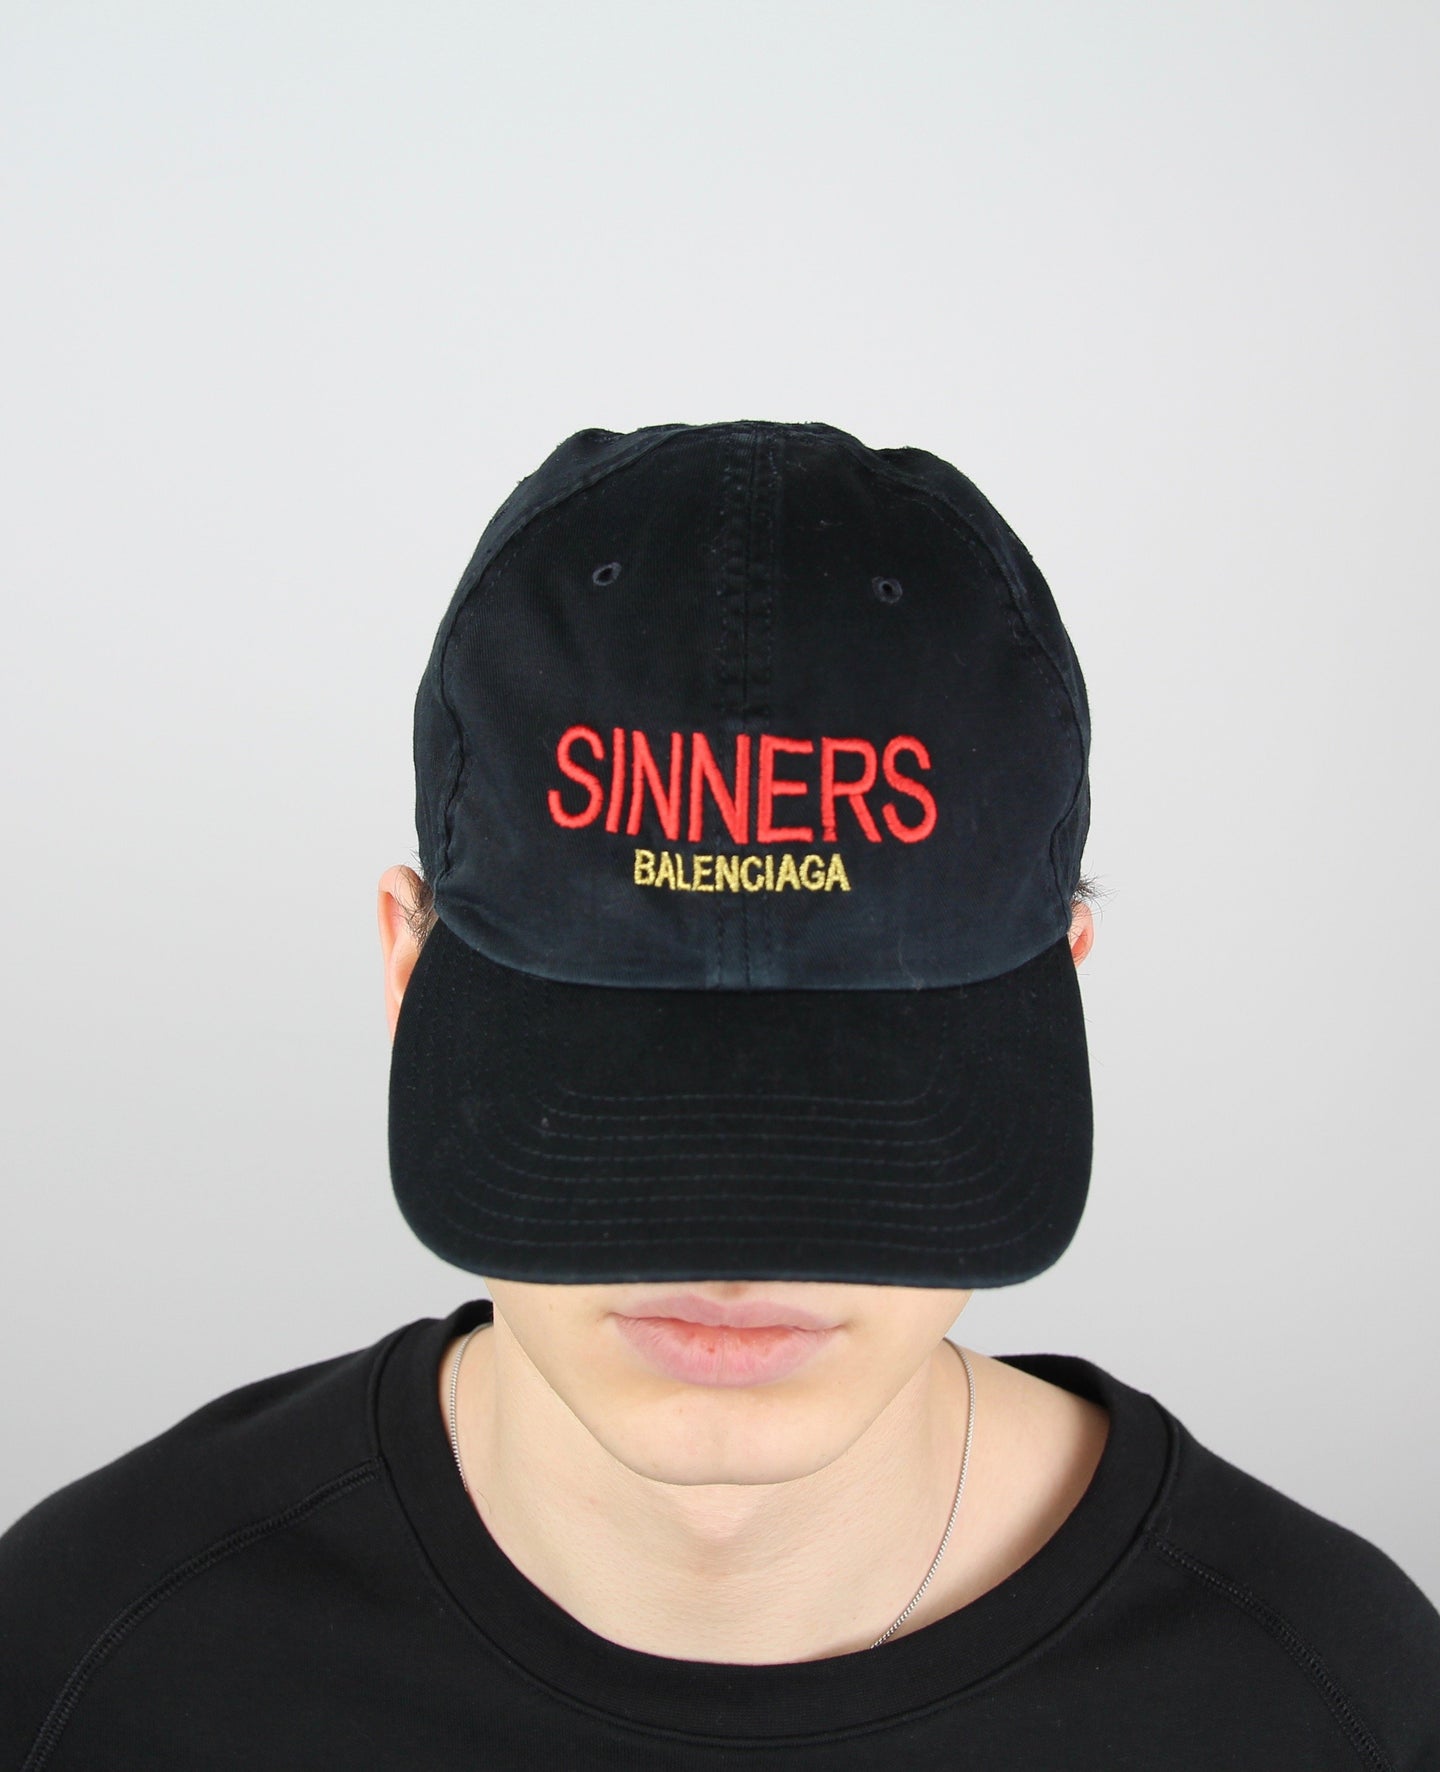 Sinners Cap